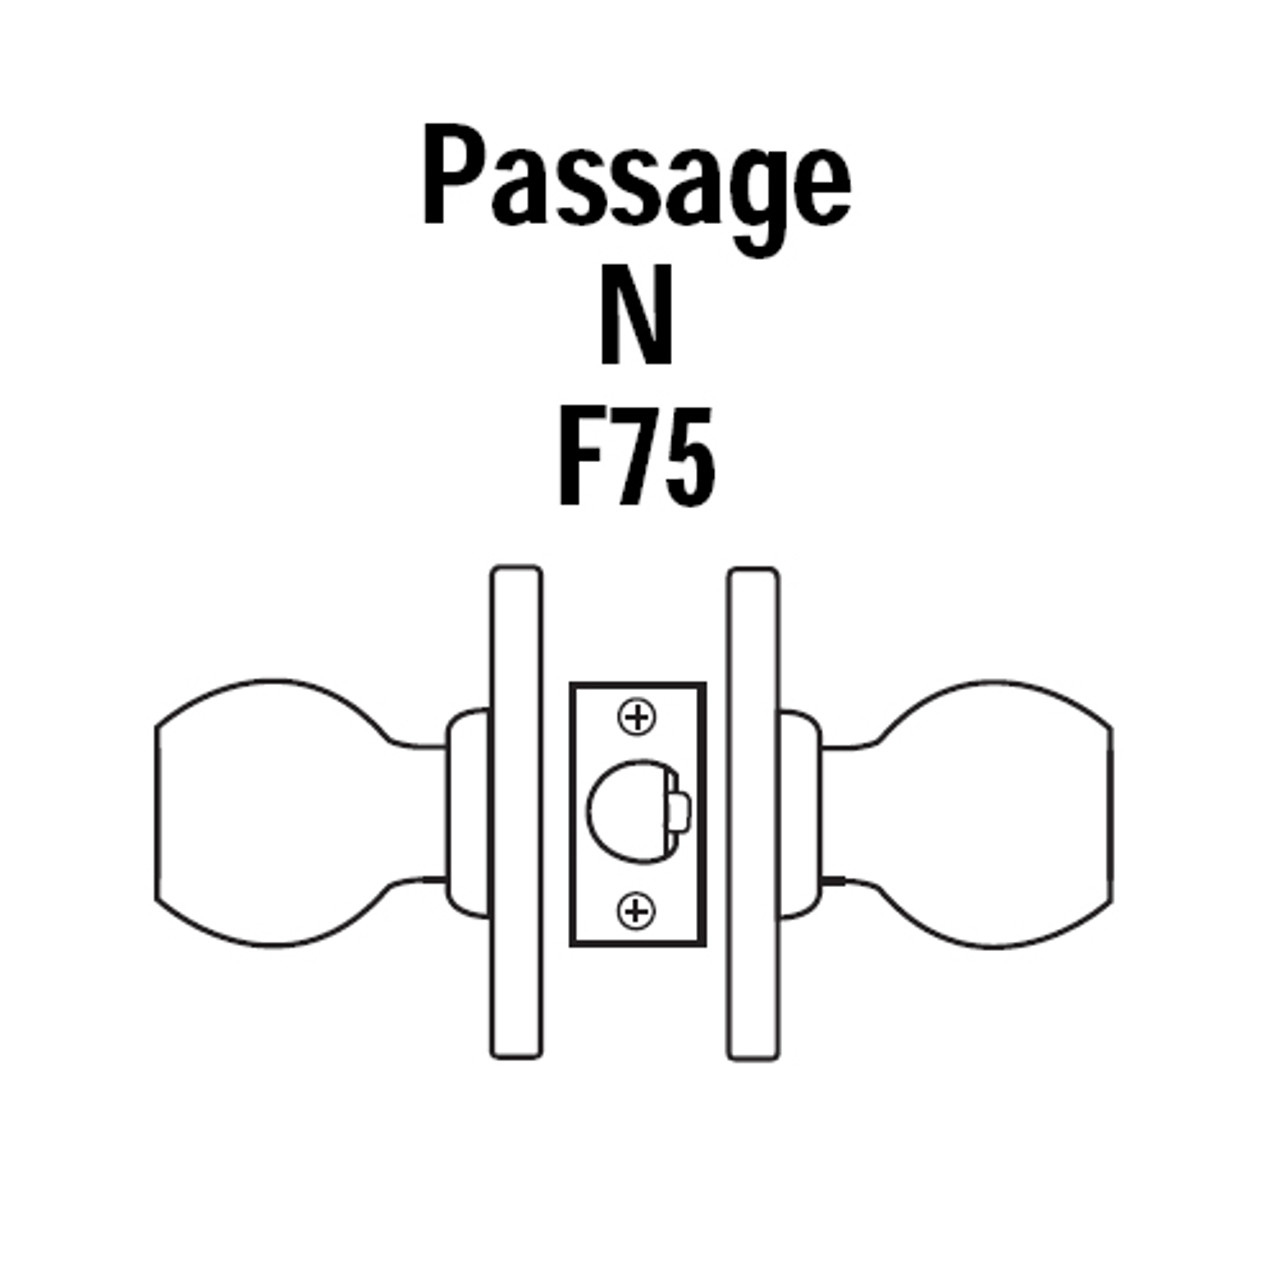 8K30N4CSTK605 Best 8K Series Passage Heavy Duty Cylindrical Knob Locks with Round Style in Bright Brass